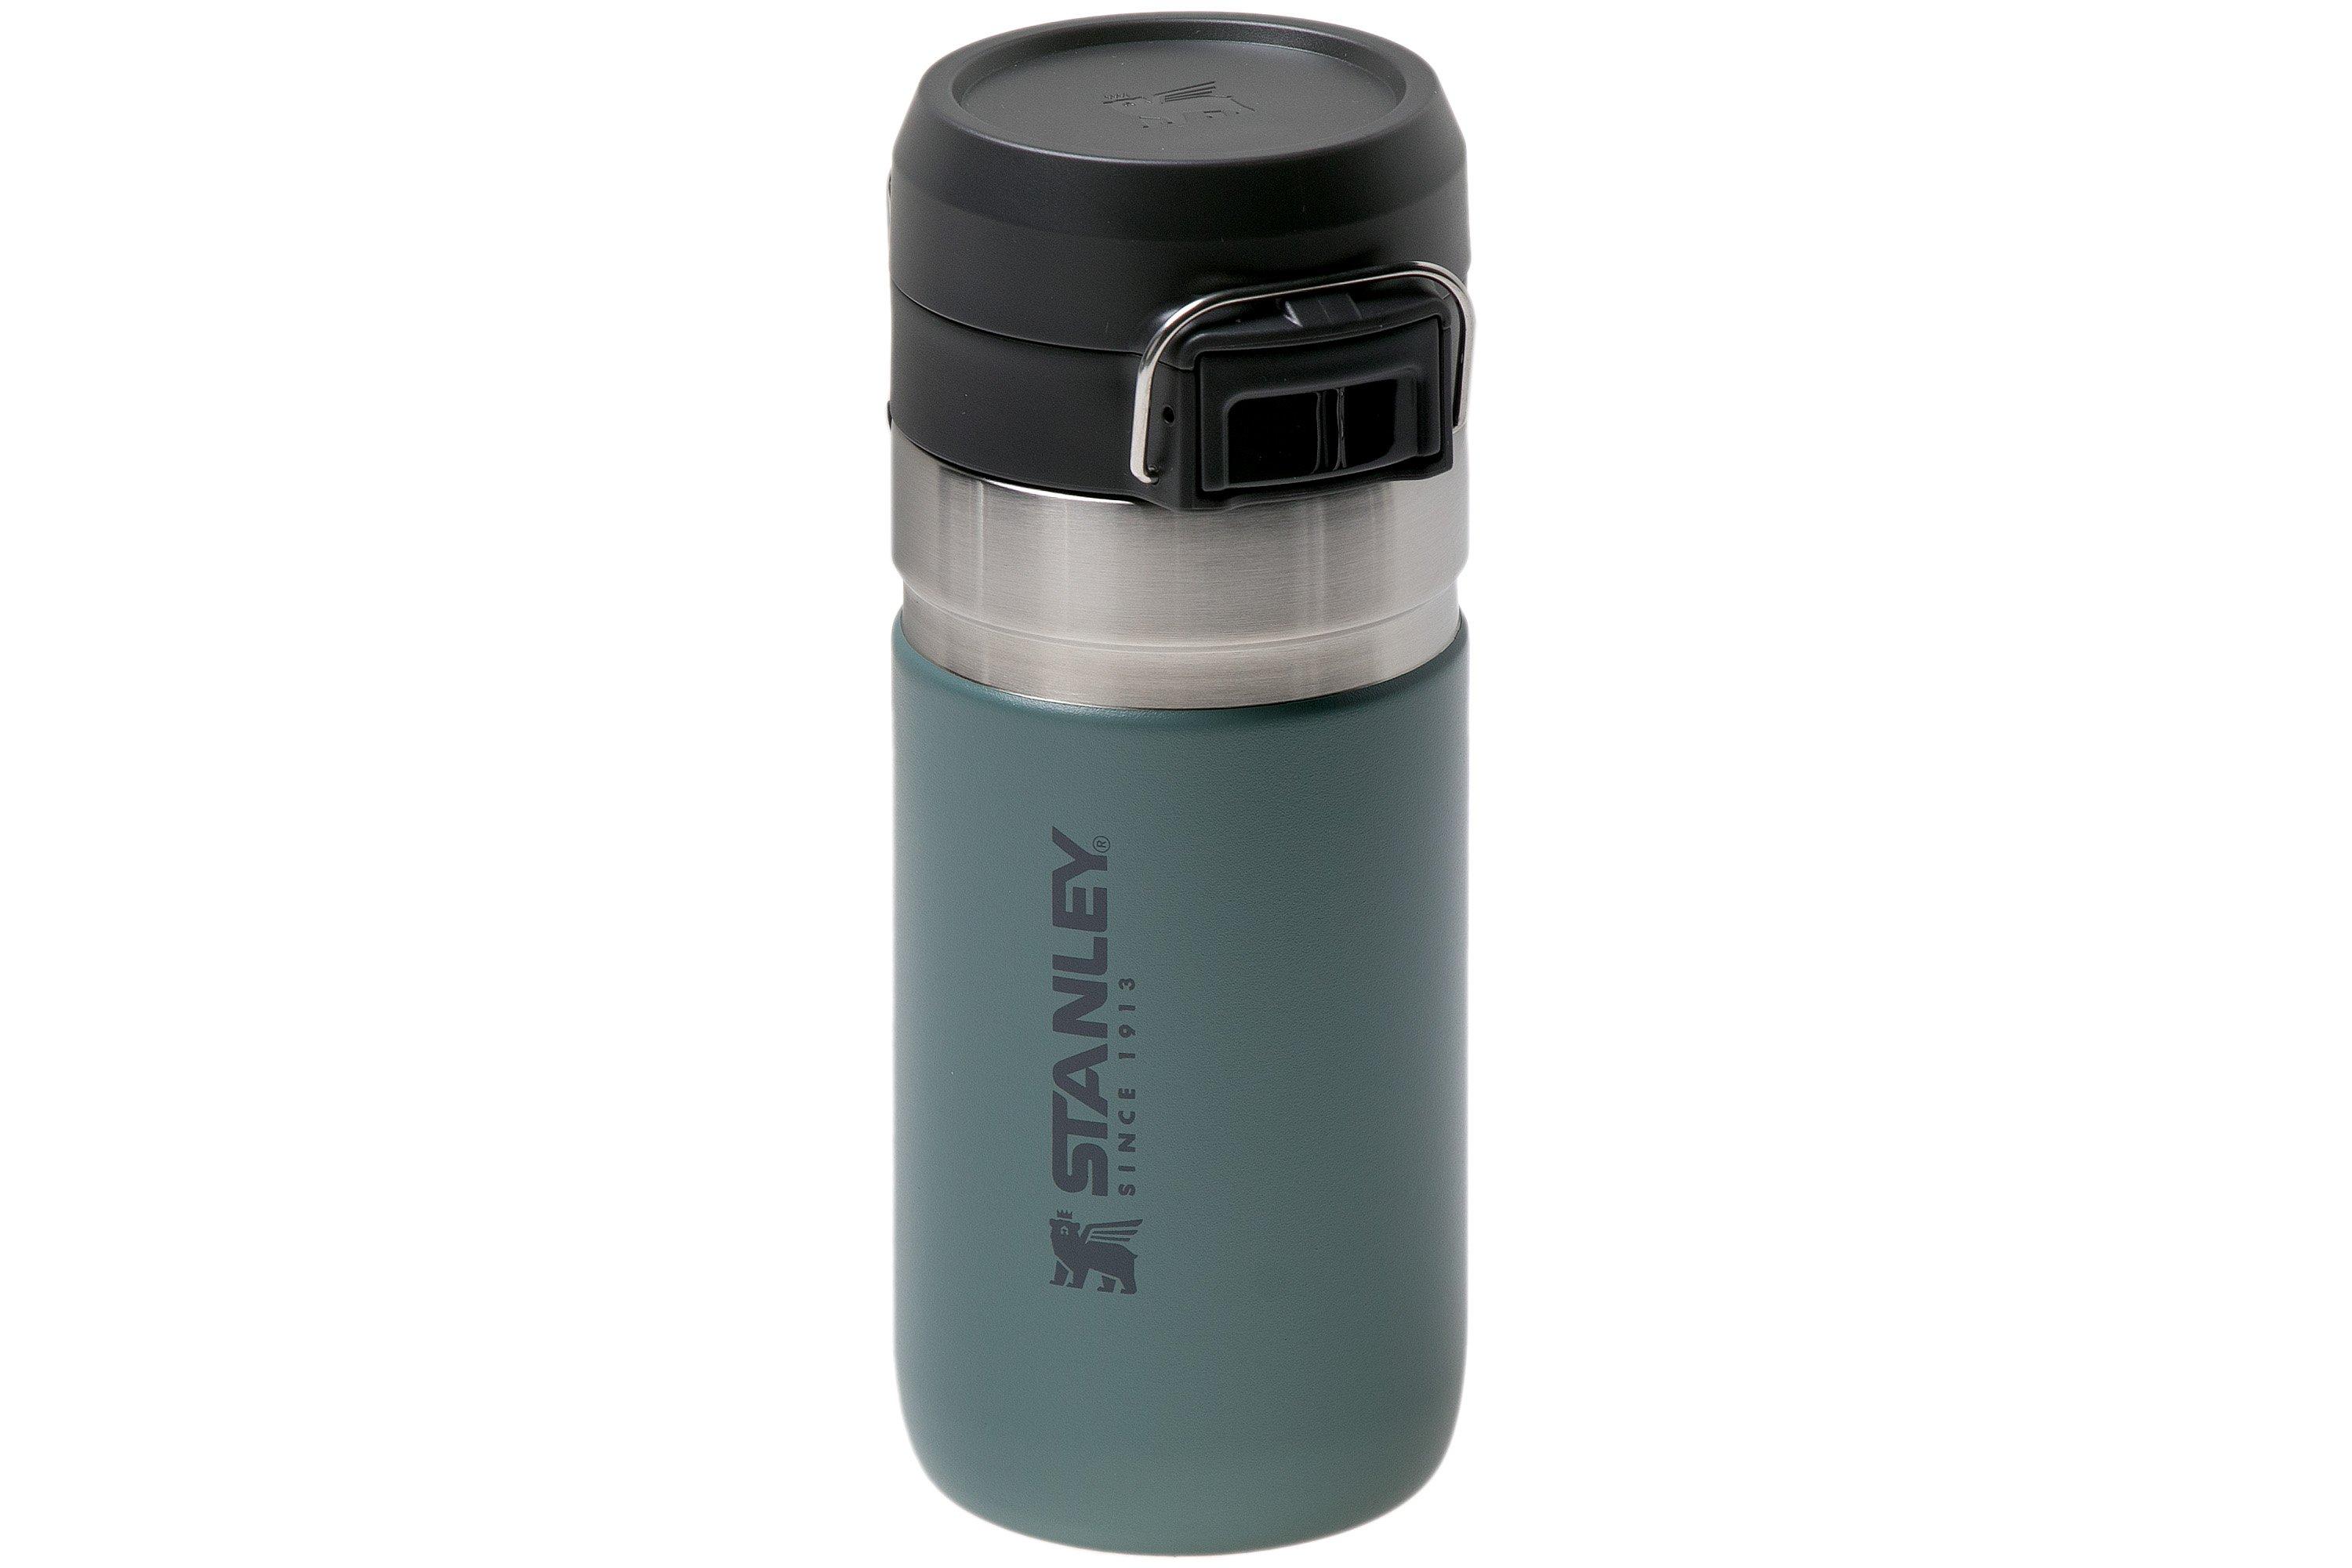 Stanley GO Series Vacuum Water Bottle 24oz - Hammertone Green